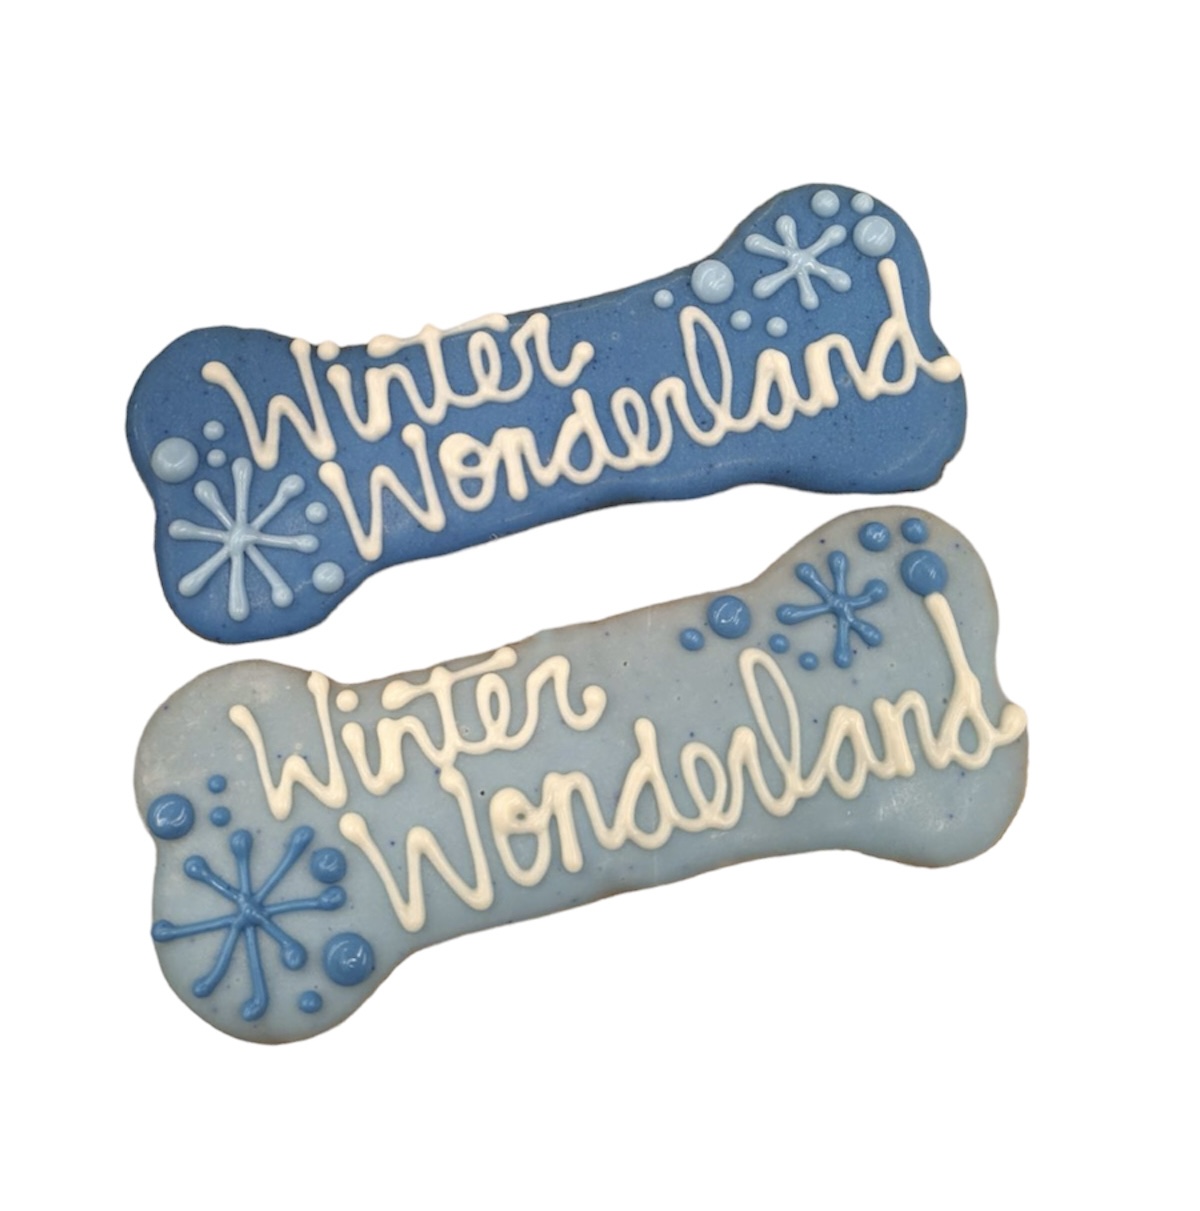 Winter Wonderland Bones - Tray of 10 *